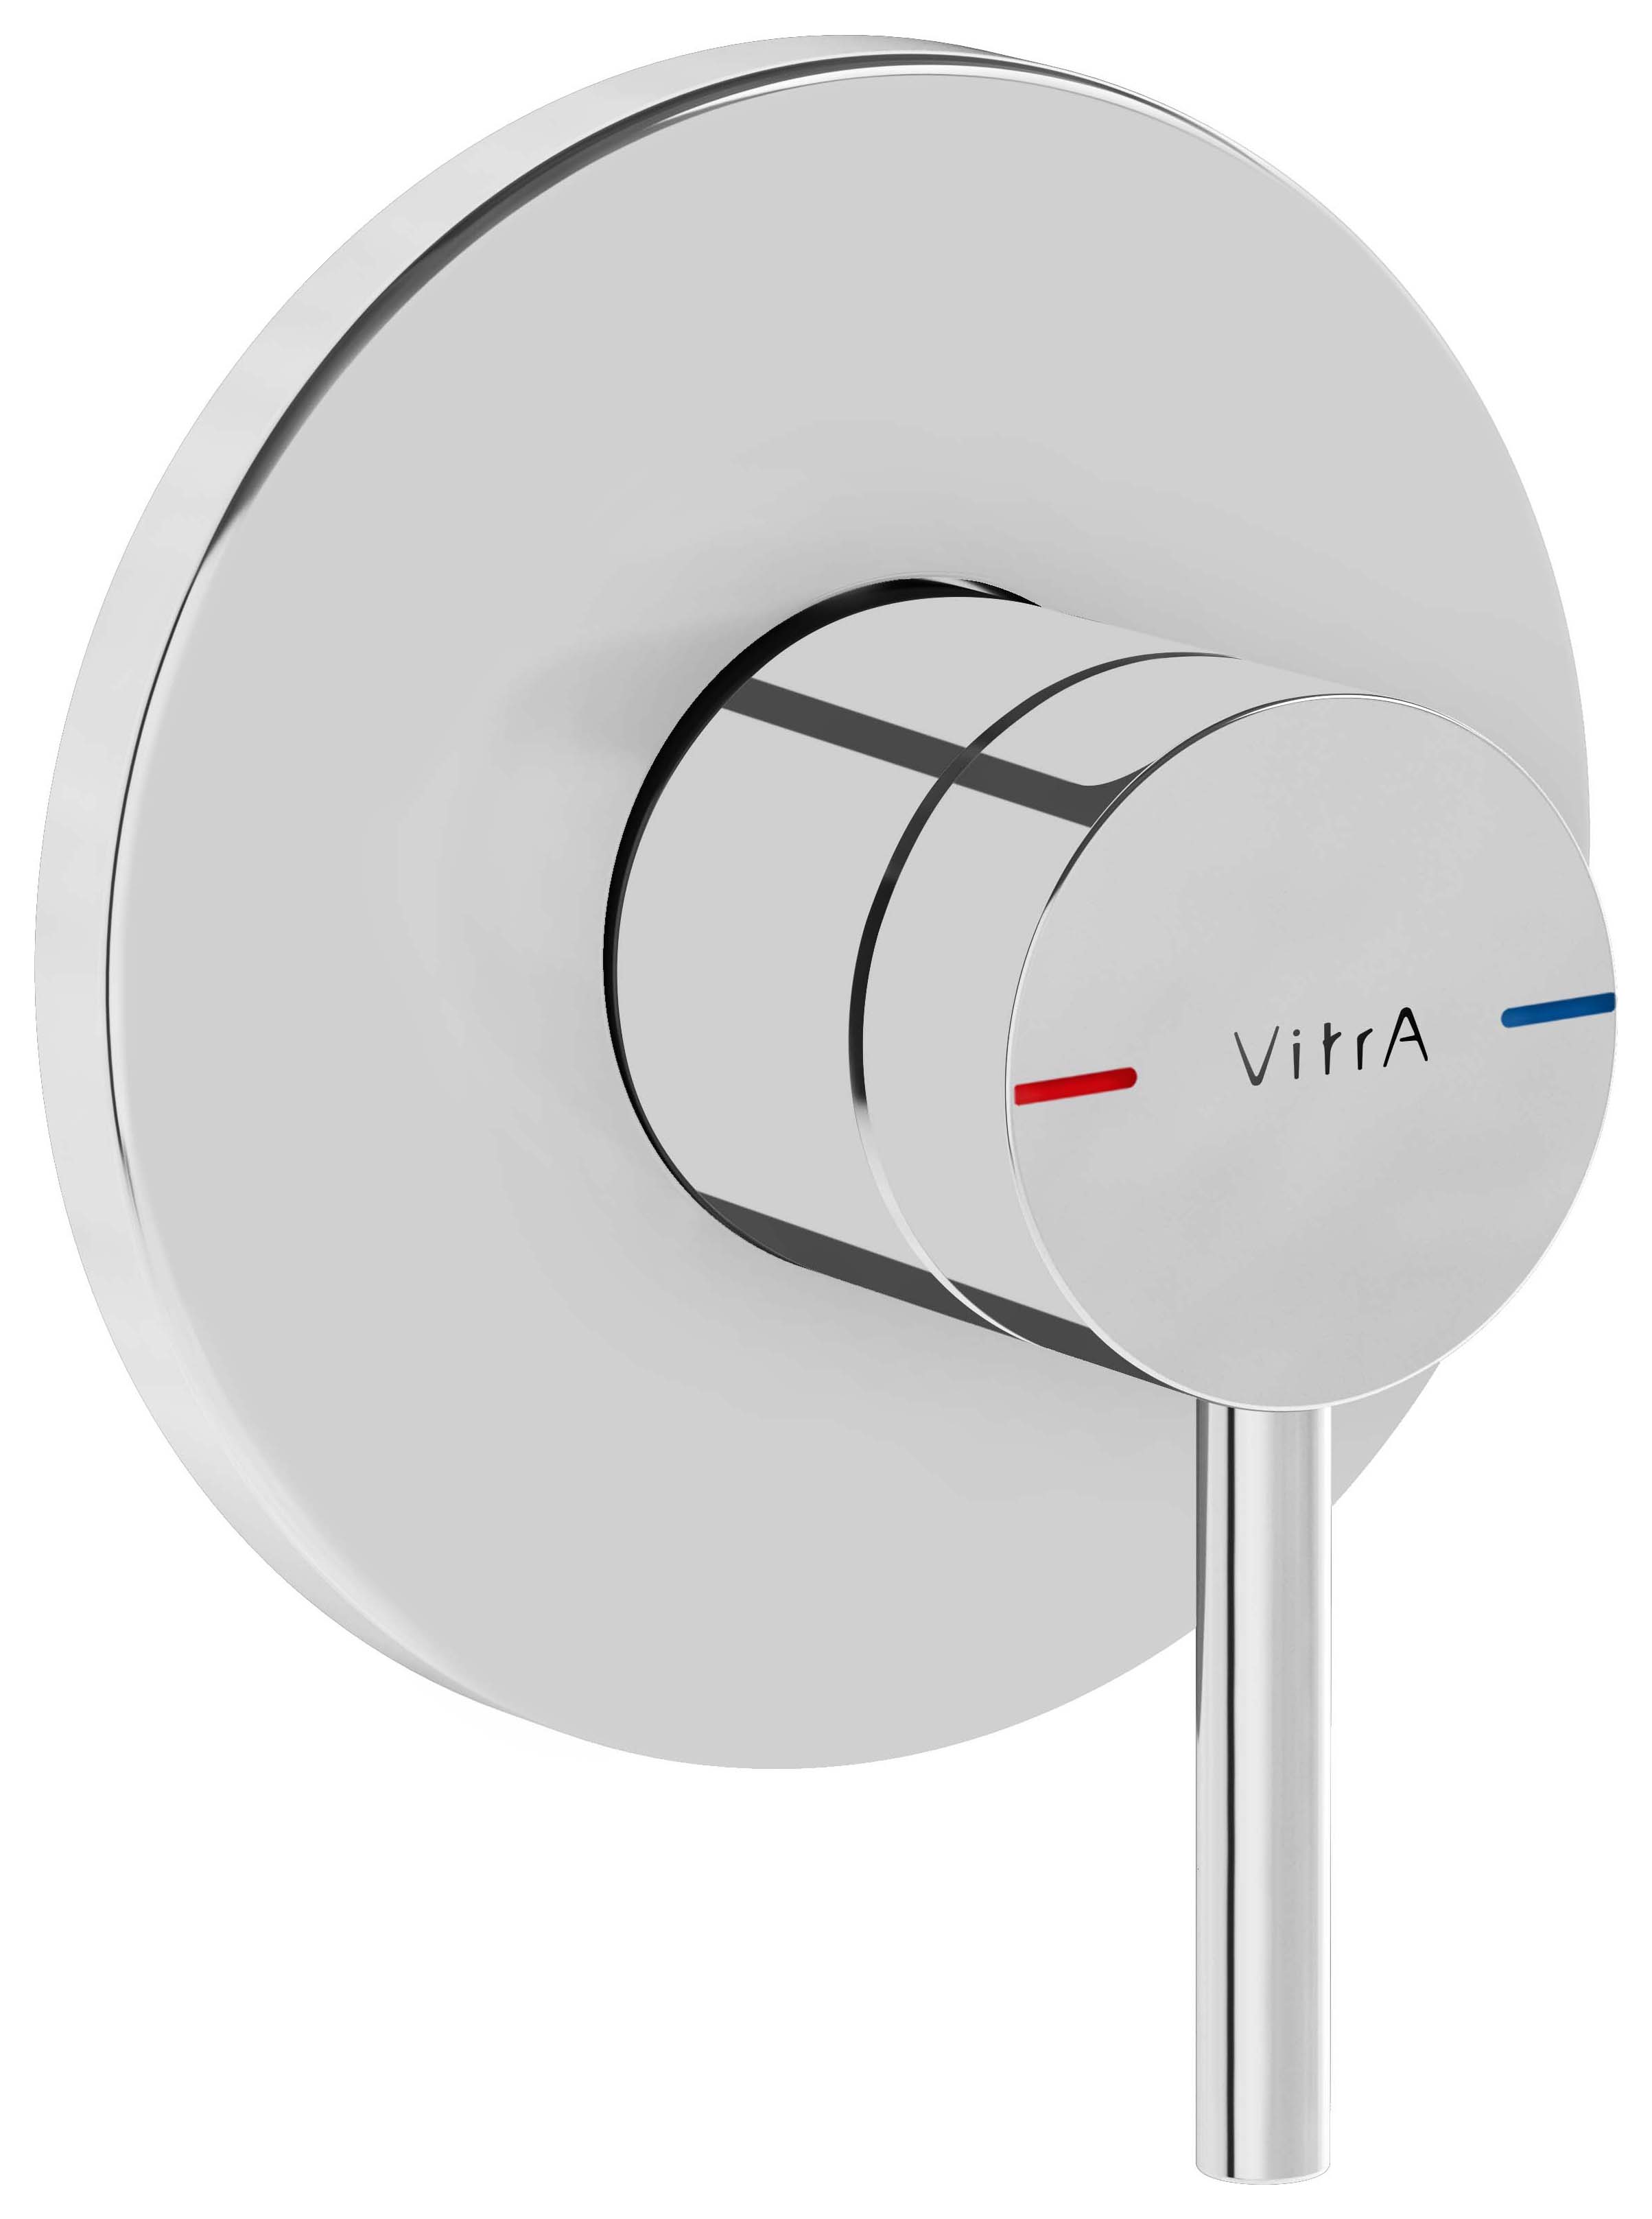 VitrA Origin Round Built-In 1 Way Exposed Shower Mixer Valve - Chrome